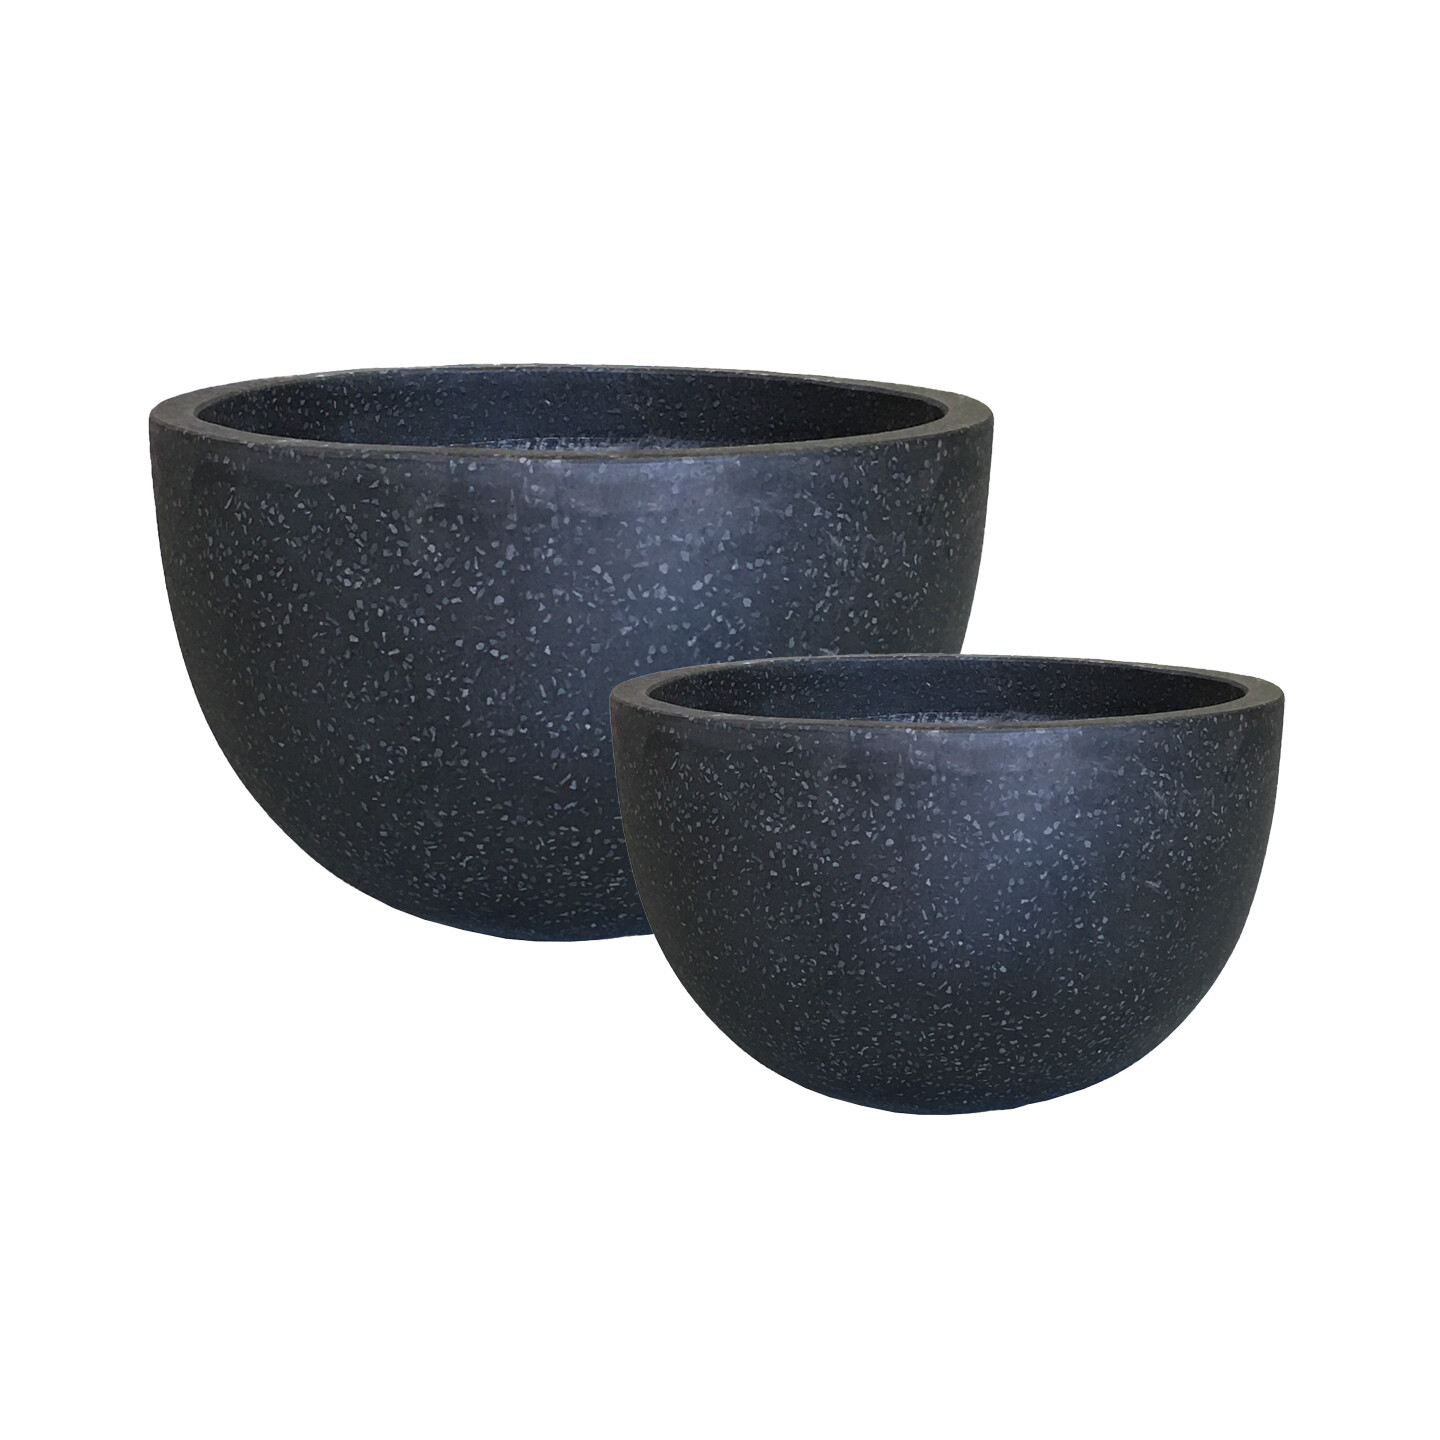 Round Bowl Shape Pot - Black Terrazzo 43cmx 30cm